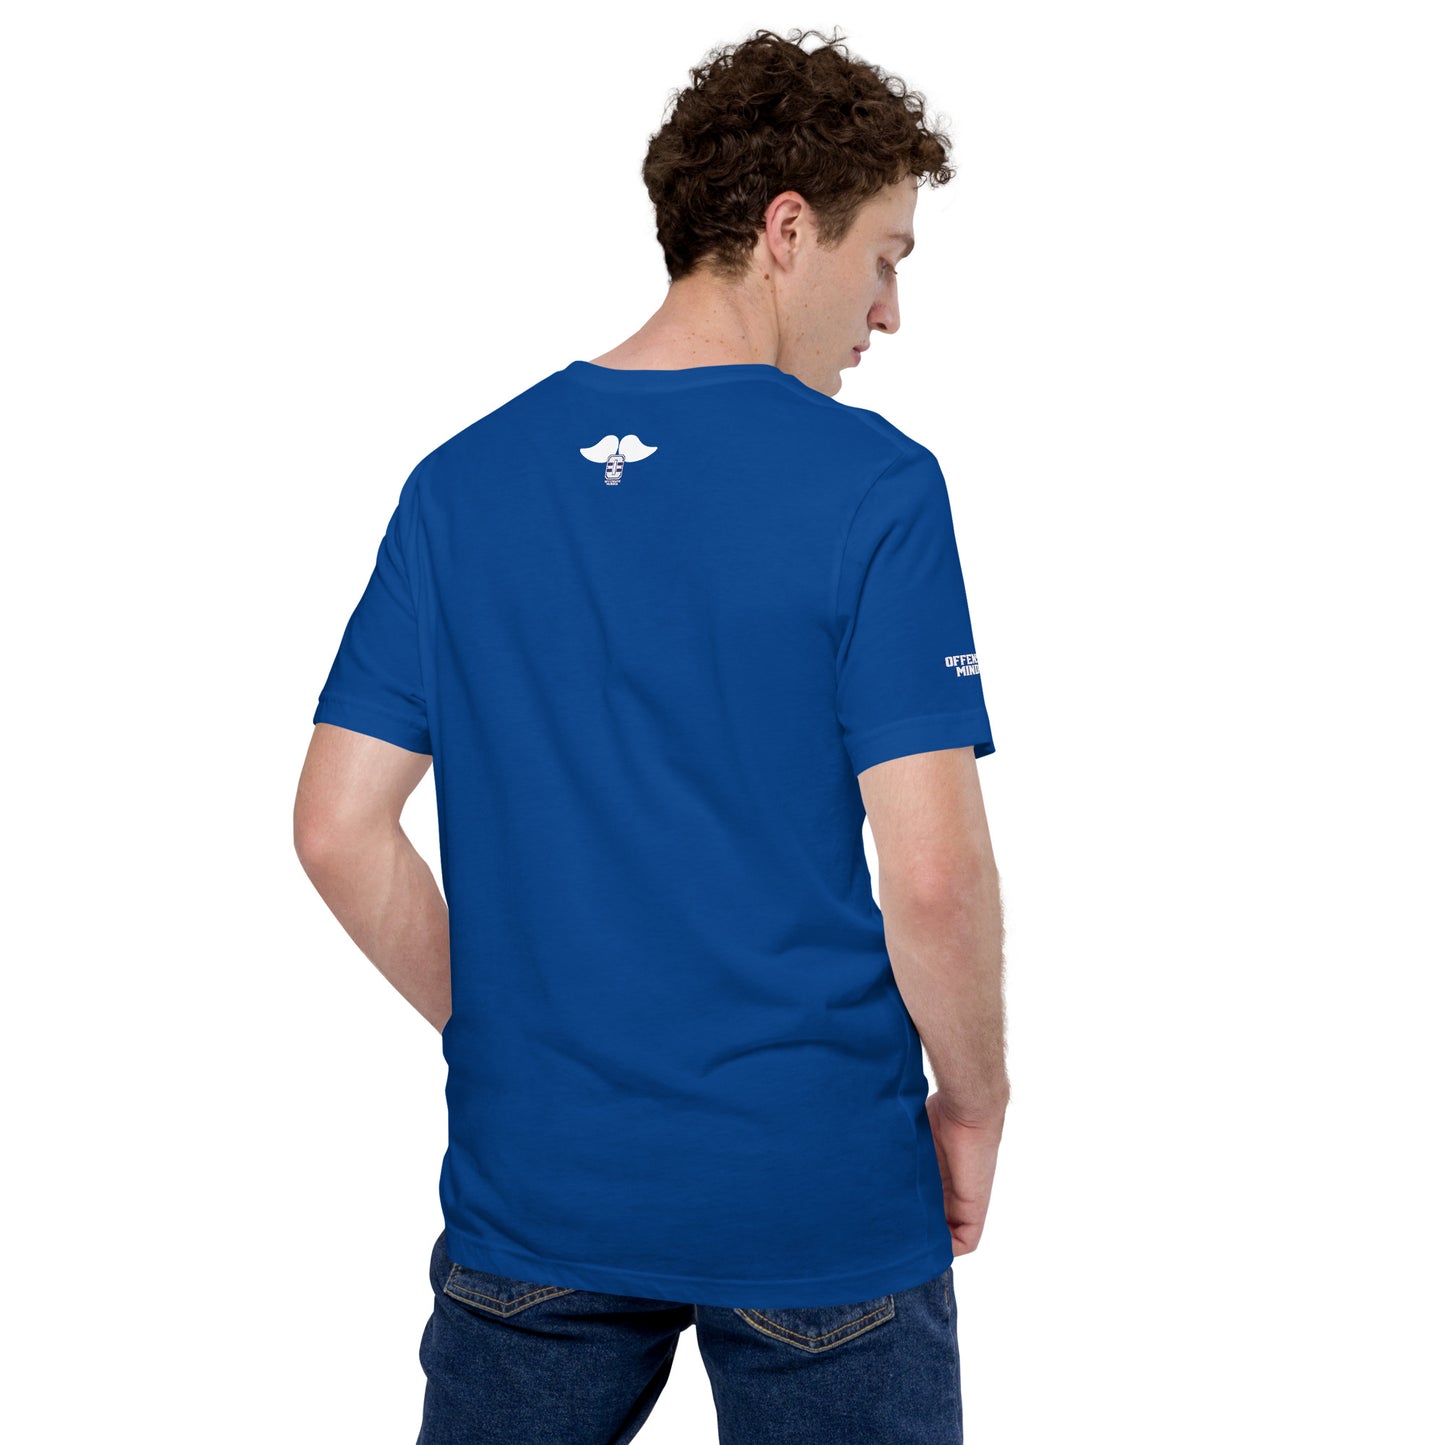 Big Papi Vision Blue Unisex t-shirt